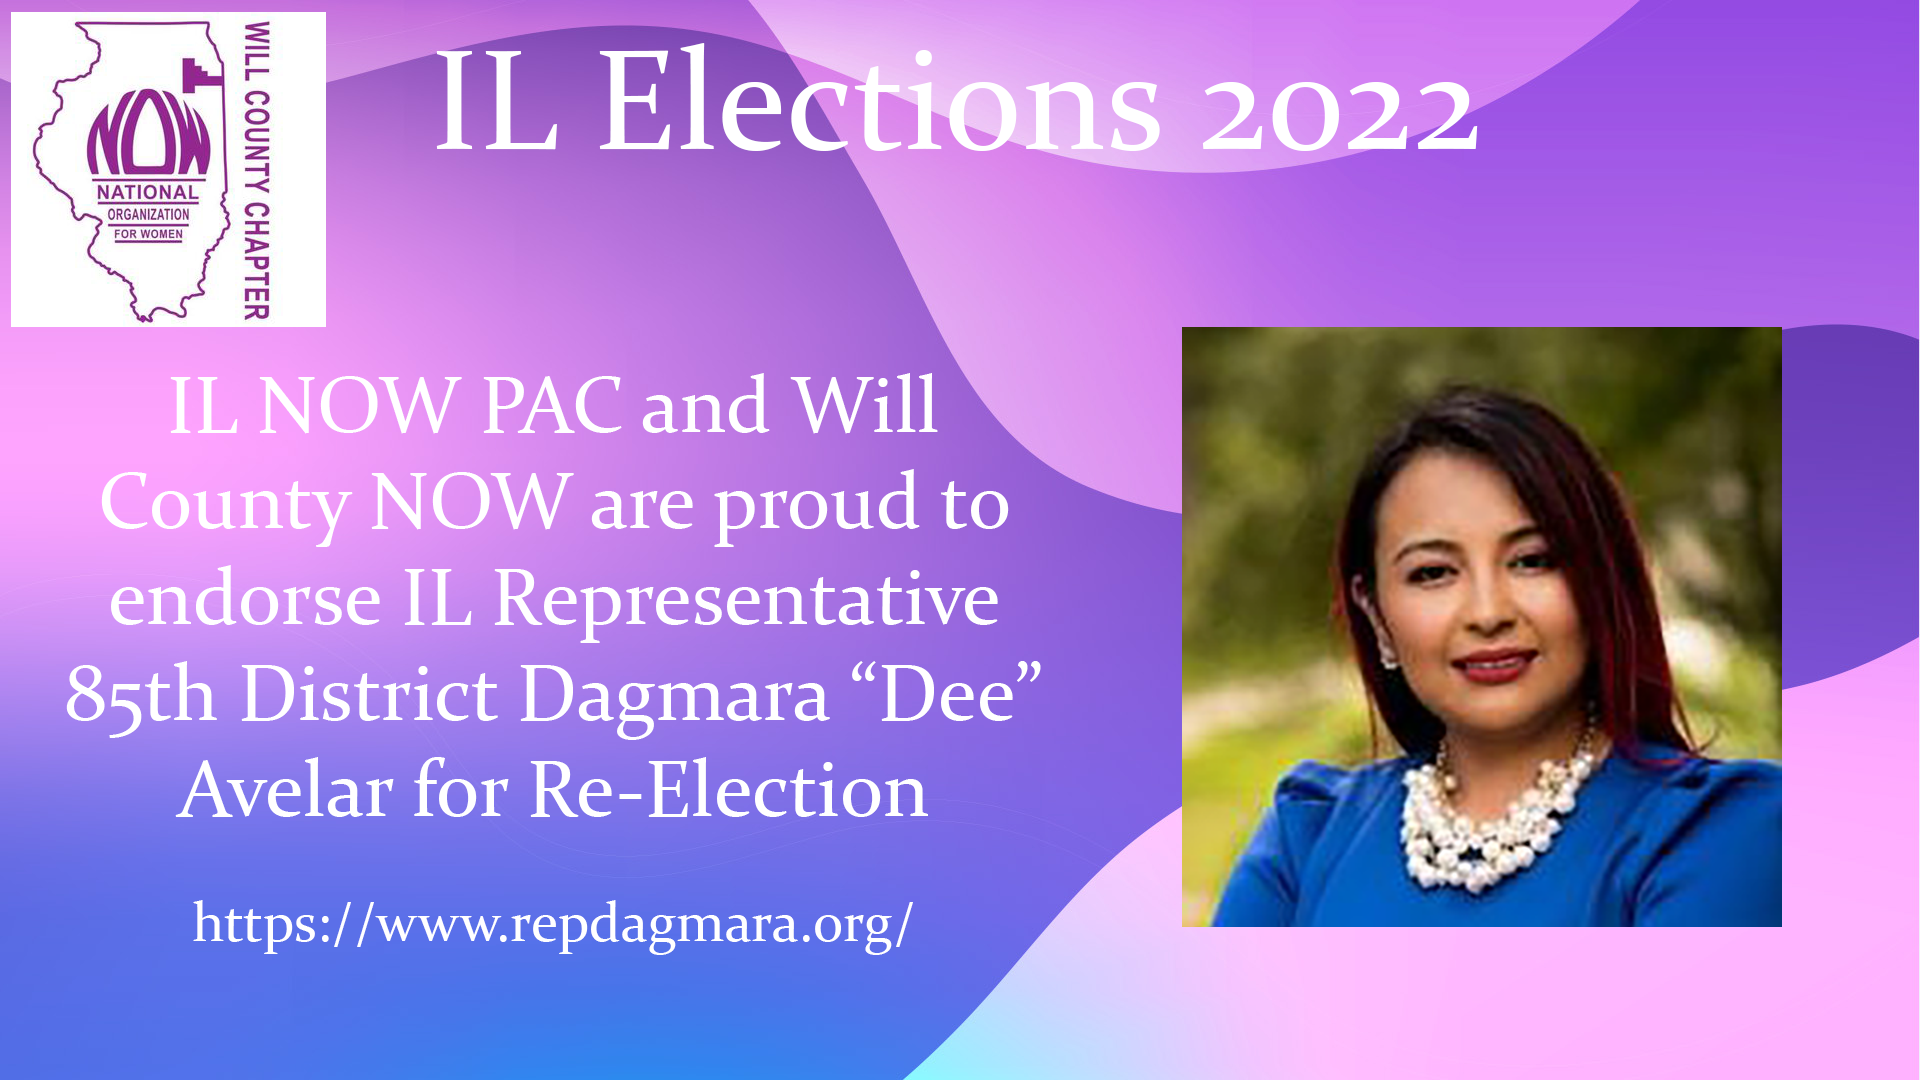 Will County NOW Endorses IL Representative 85th District Dagmara “Dee” Avelar for Re-Election